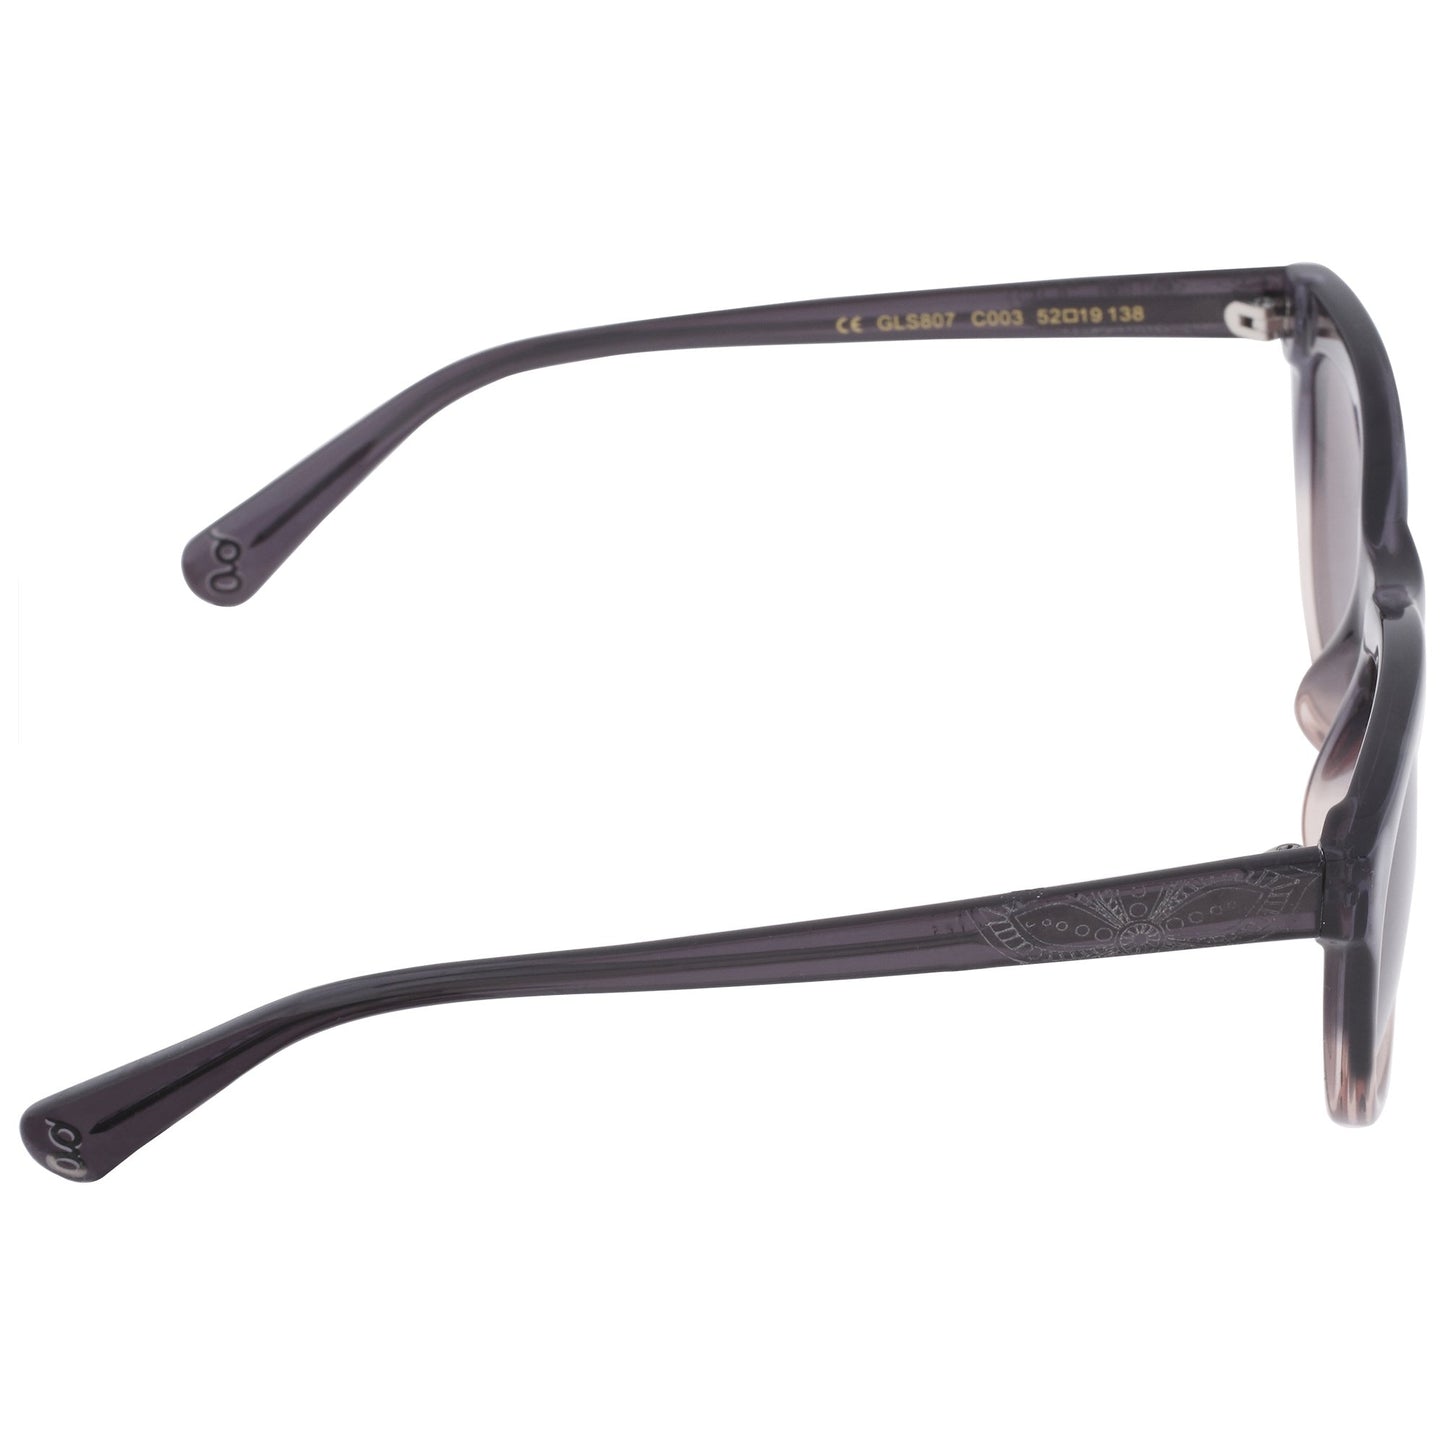 Giordano UV Protected Cateye Women Sunglasses (GLS807C003|50|Grey lens)